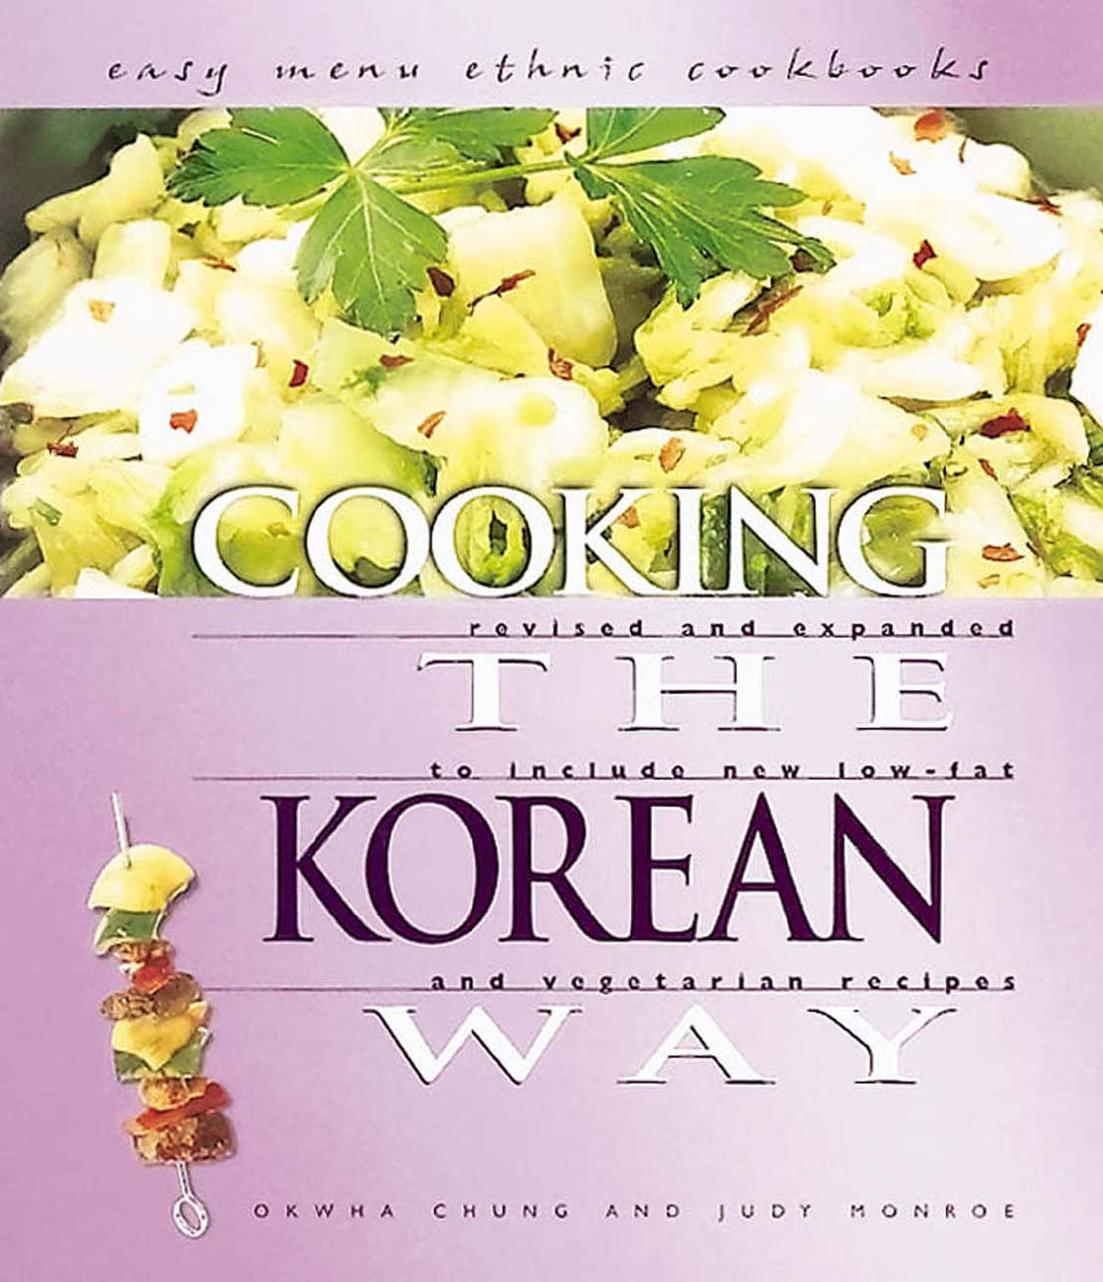 Cooking the Korean Way by Okwha Chung & Judy Monroe